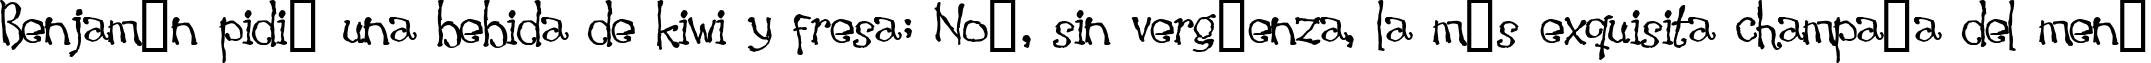 Пример написания шрифтом Waking the Witch текста на испанском